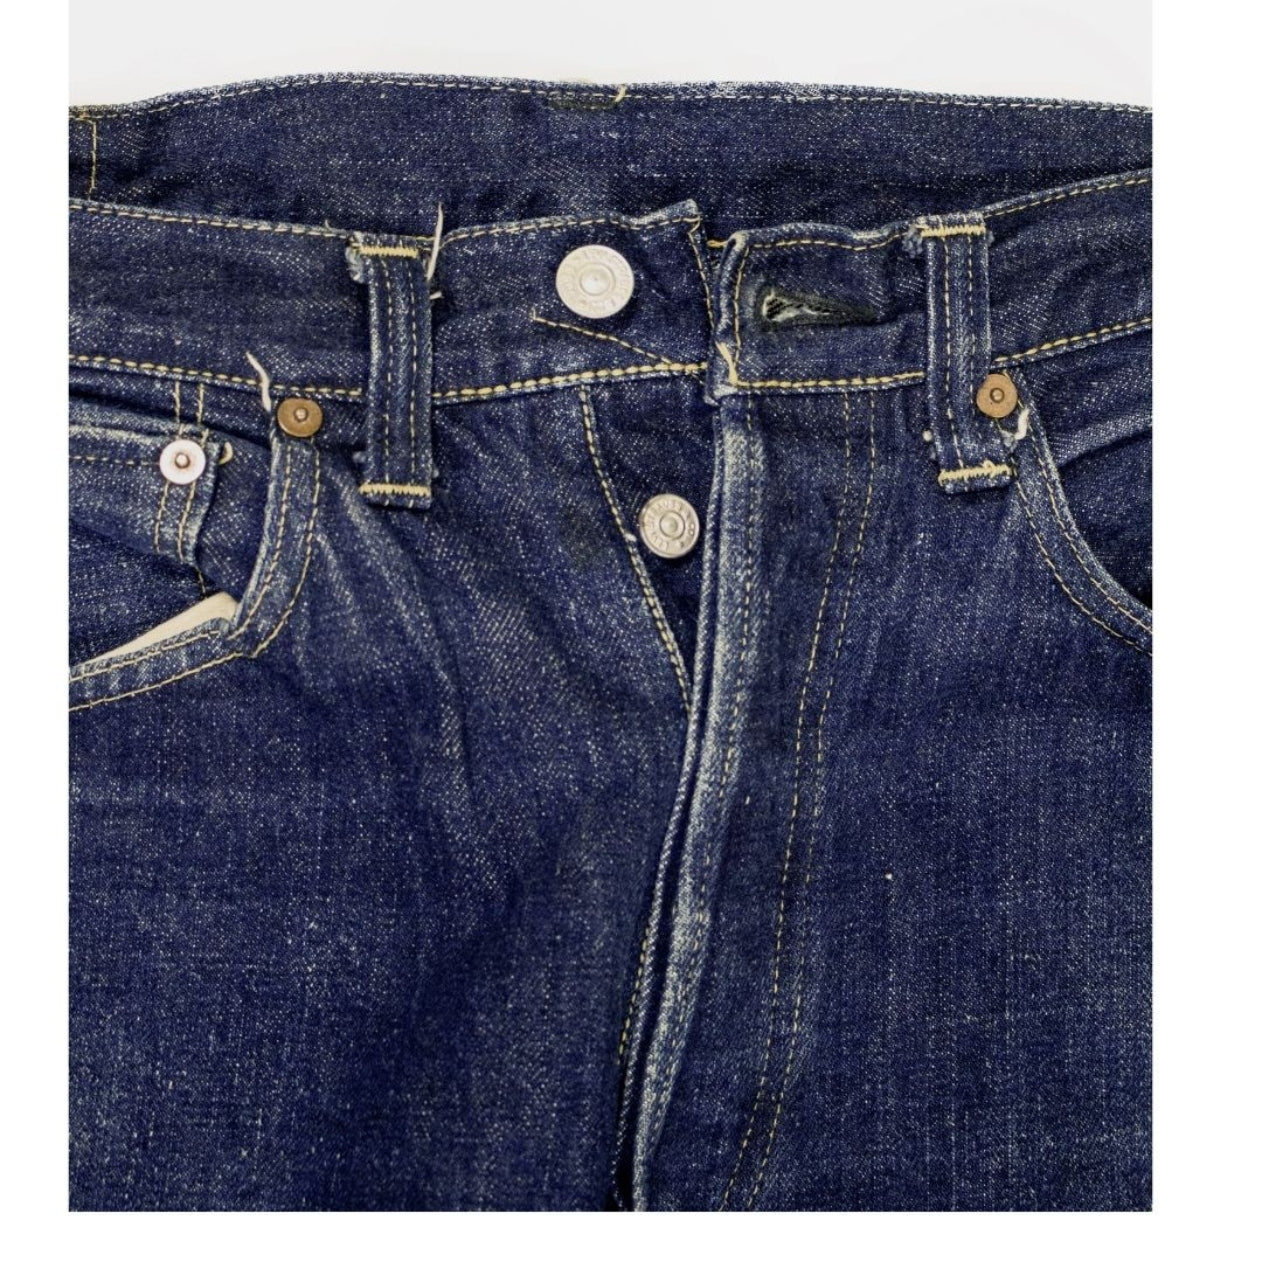 Late 1940s Levi's 501 jeans - very rare W30, L31 - levis – Beyond Retro